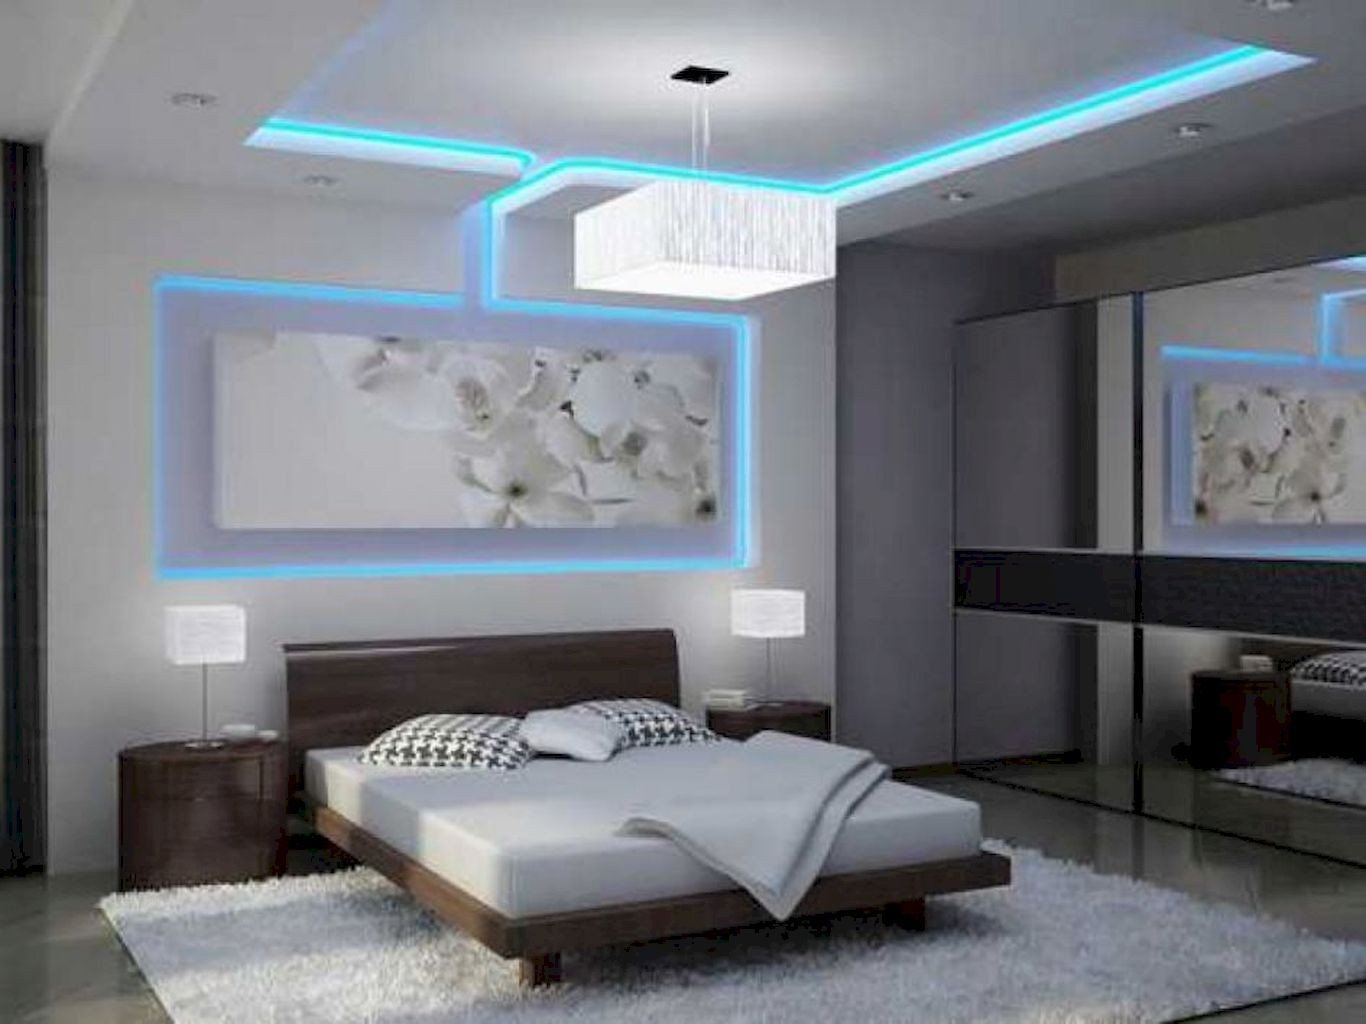 Led Lighting for Bedroom Luxury Led Ceiling Light Decoration Ideas for Home